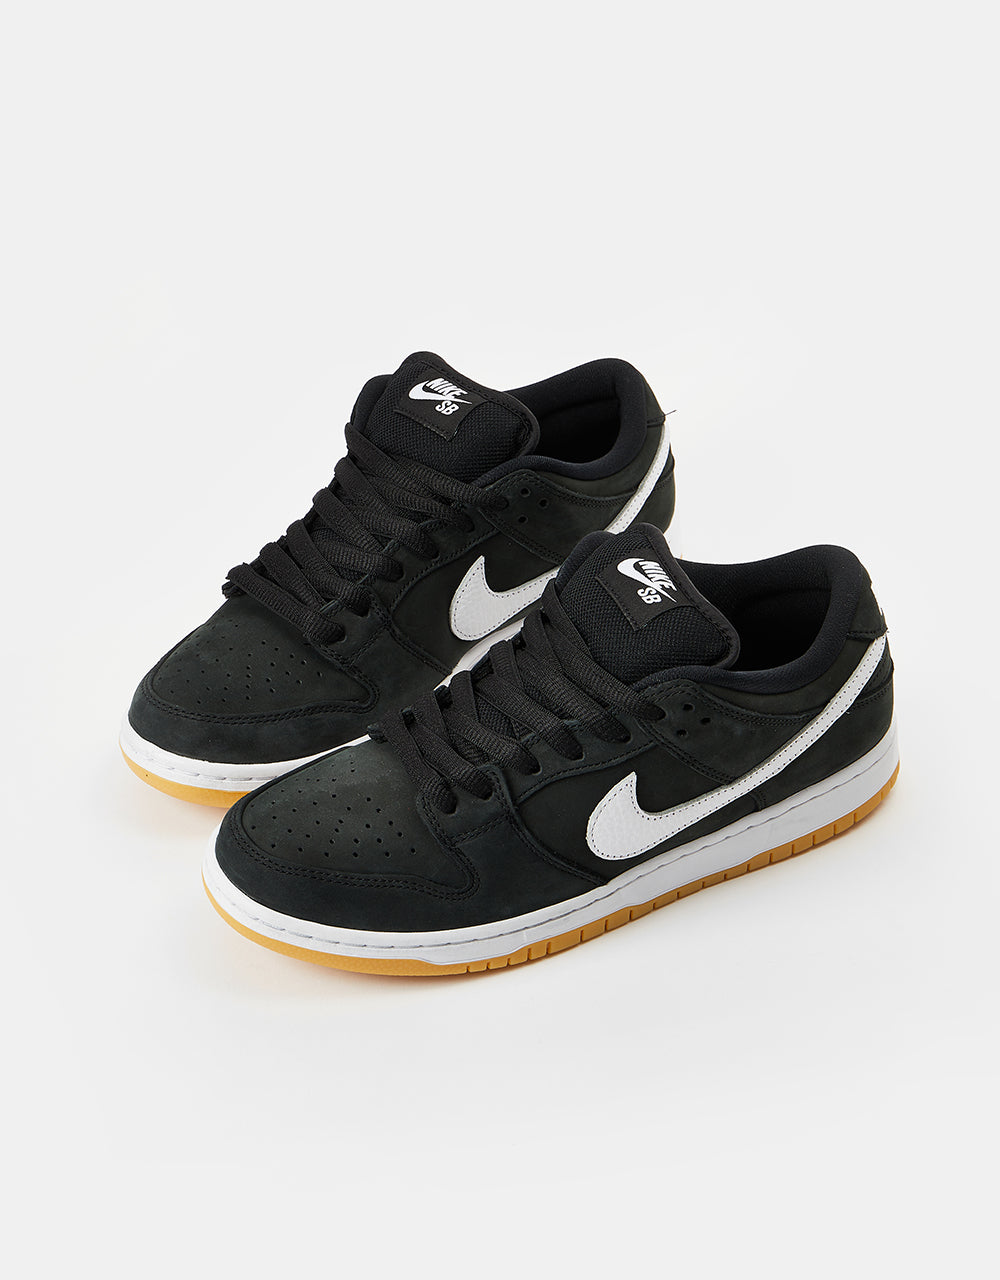 Nike SB Dunk Low Pro Premium Skate Shoes - Black/White-Black – Route One